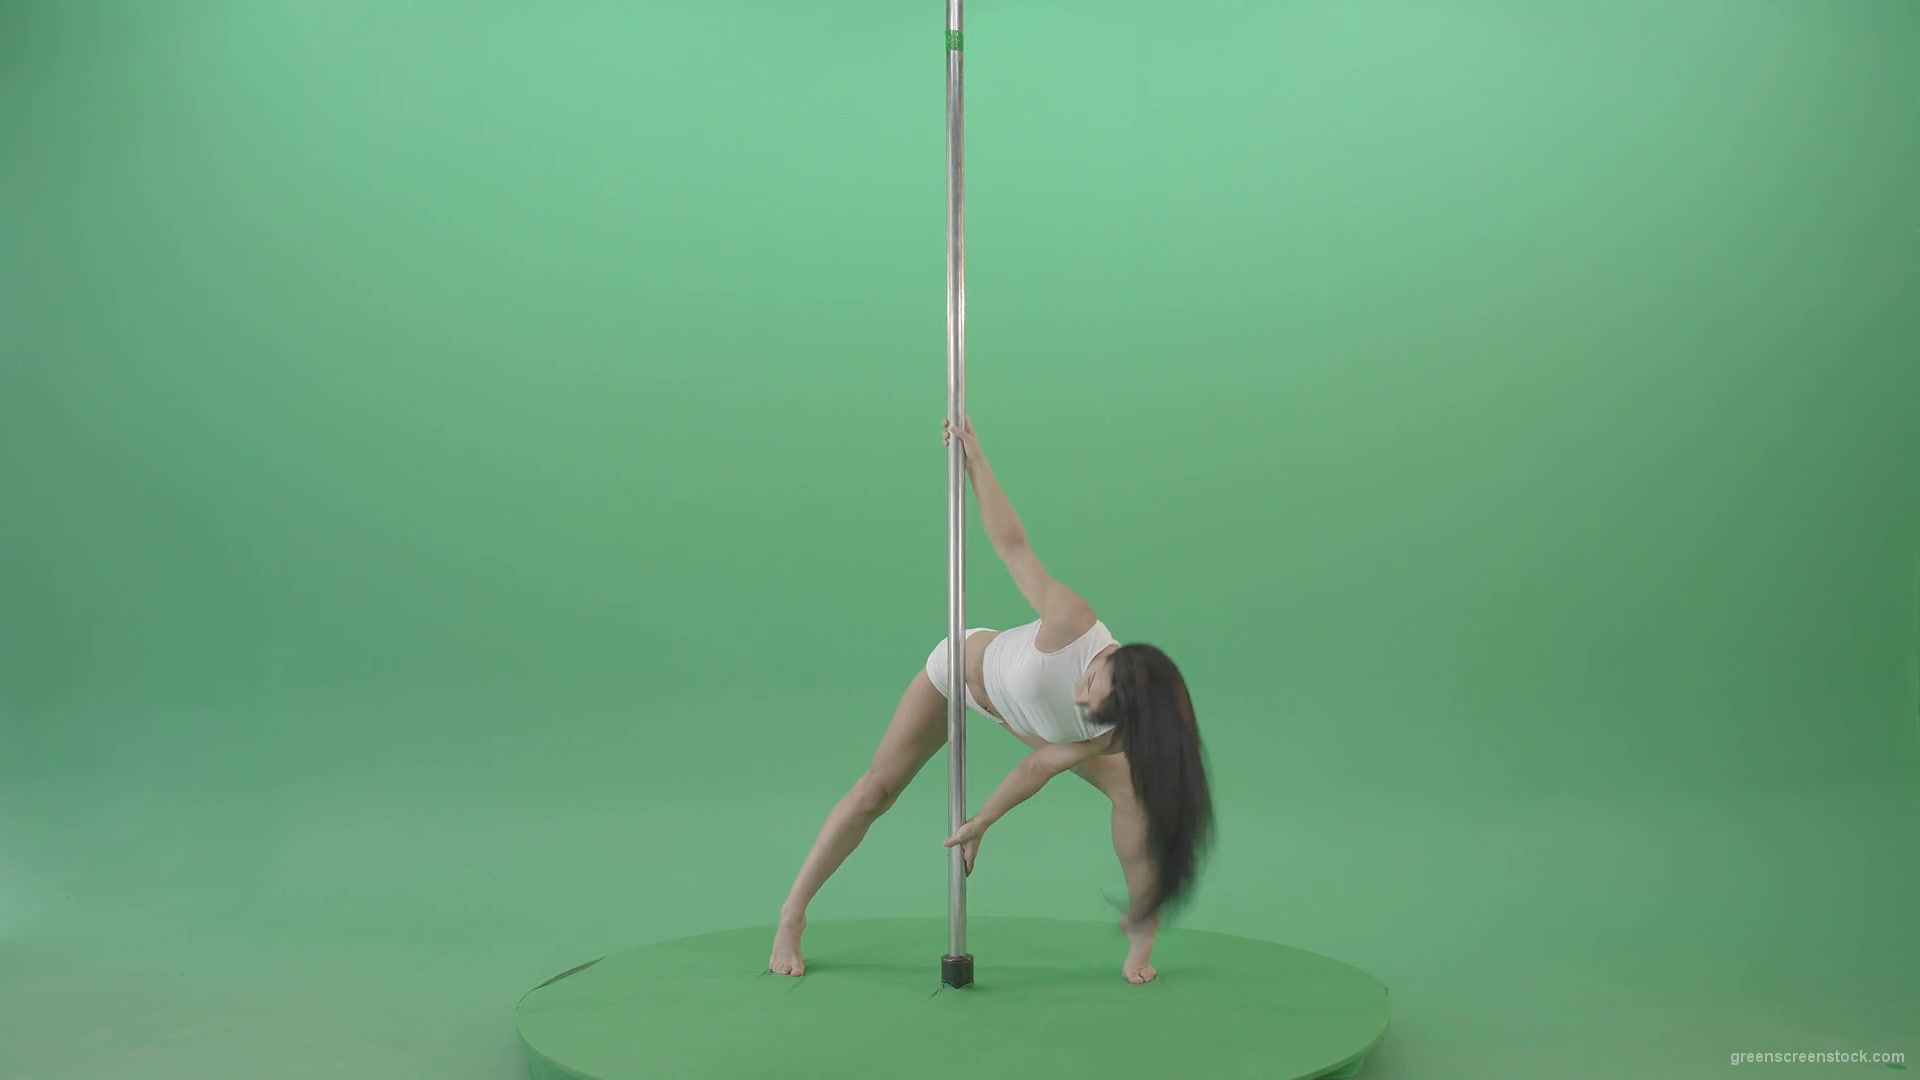 Pole-dance-trainer-girl-has-a-sport-flight-on-green-screen-4K-Video-Footage-1920_009 Green Screen Stock